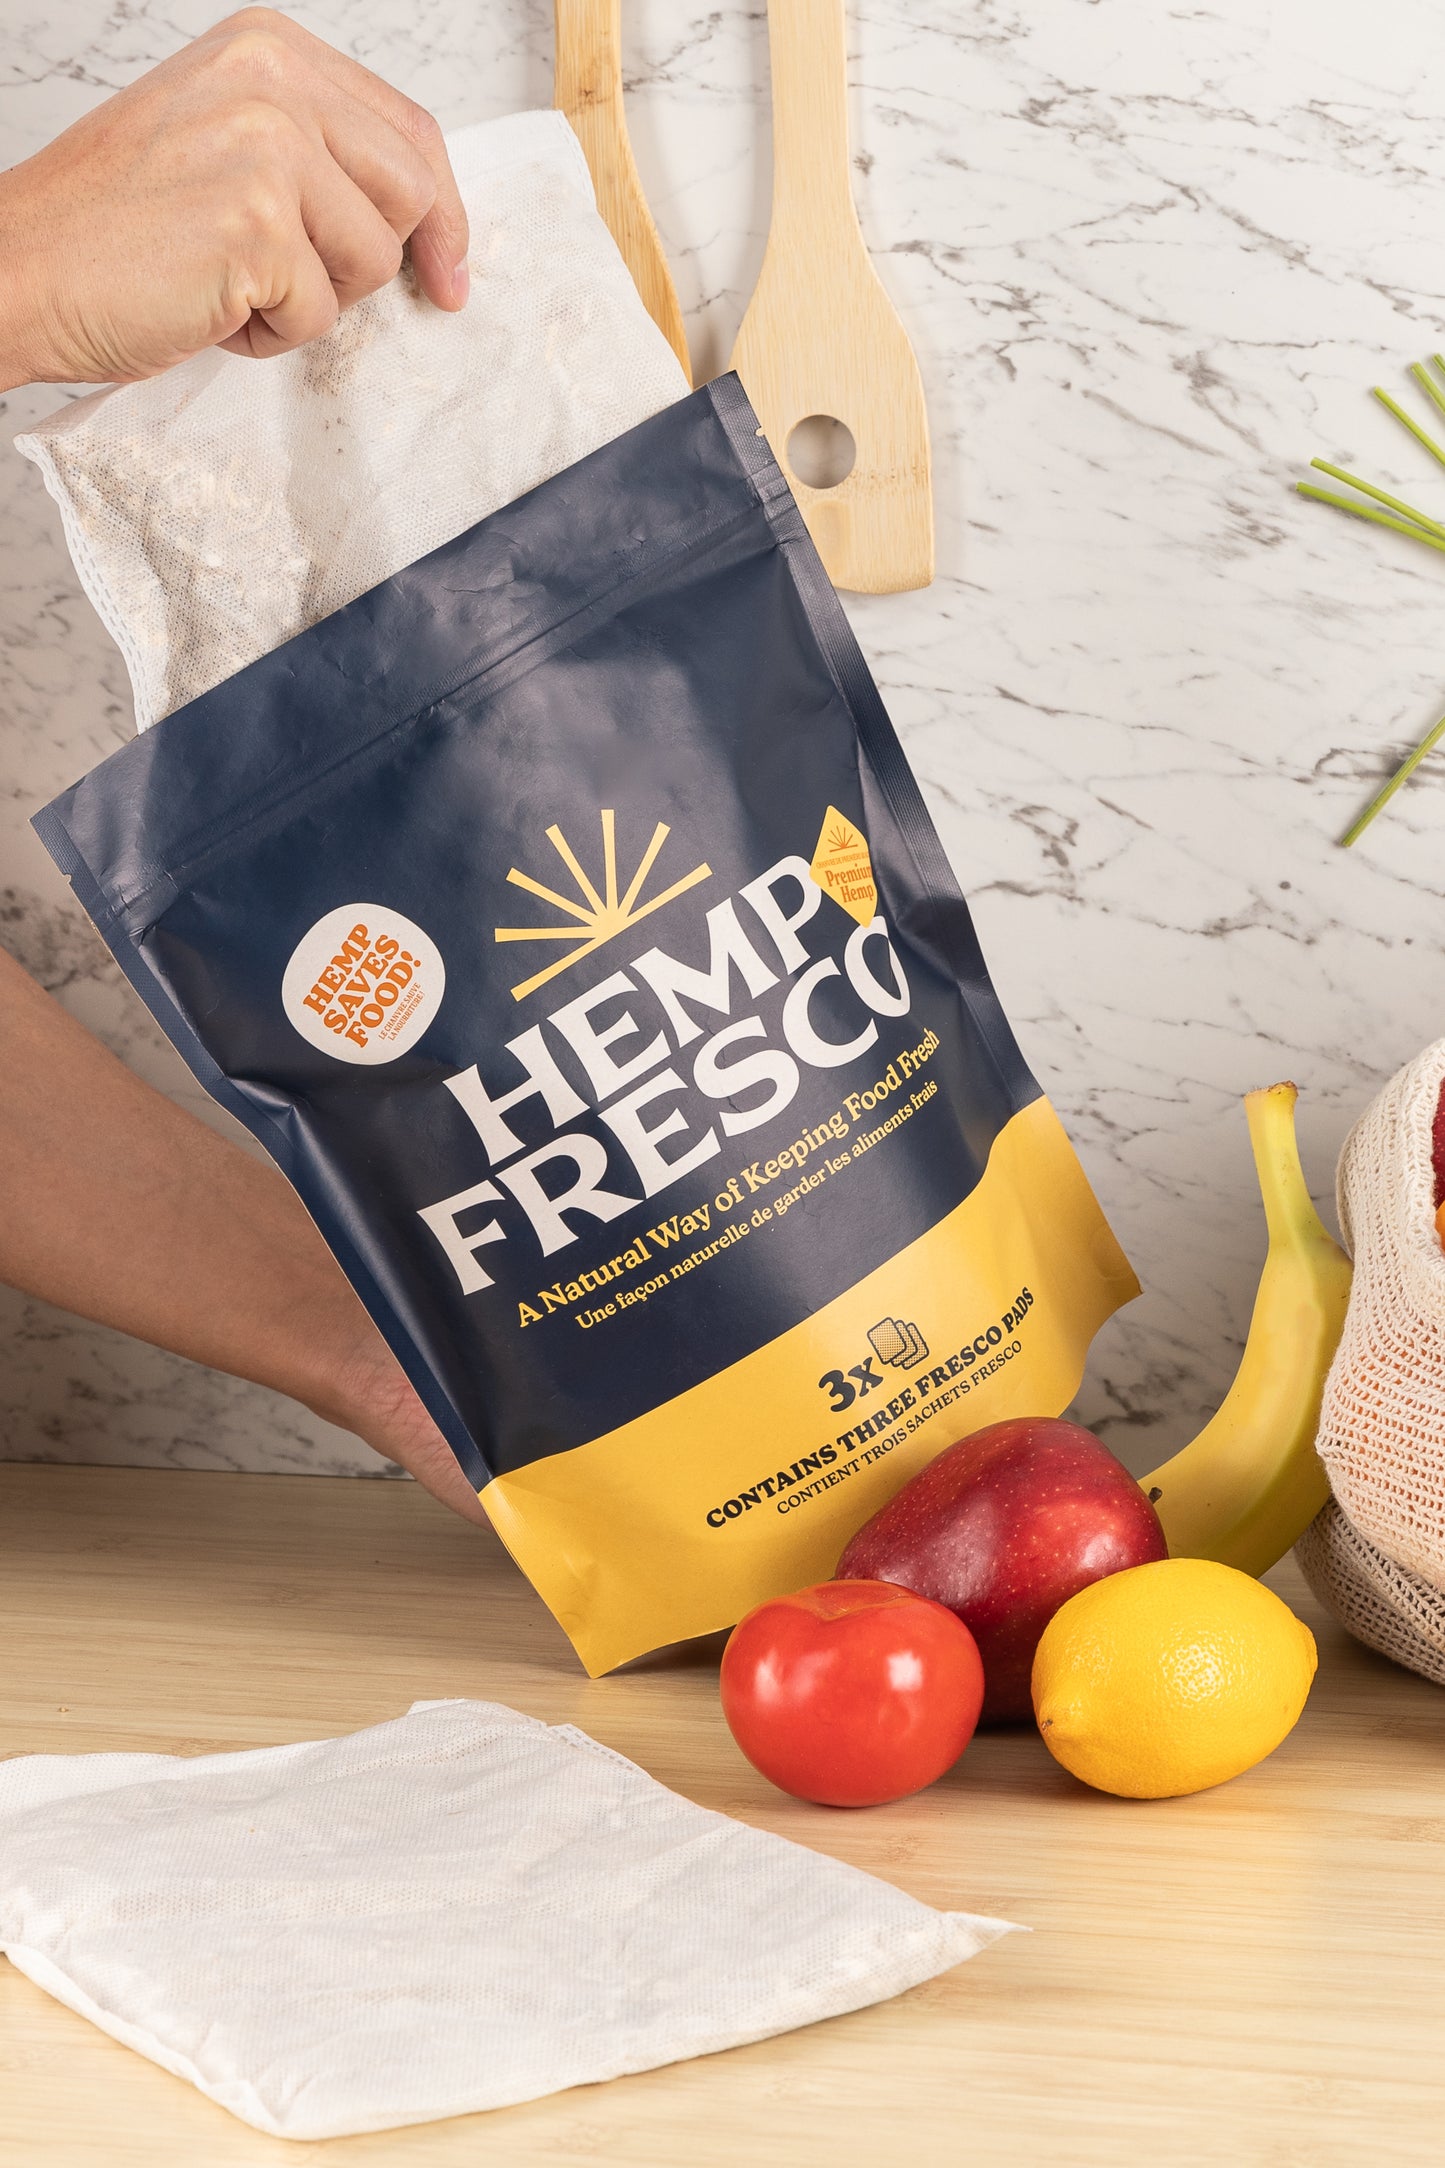 Hemp Fresco Food Preservation Pads - 3 Pack